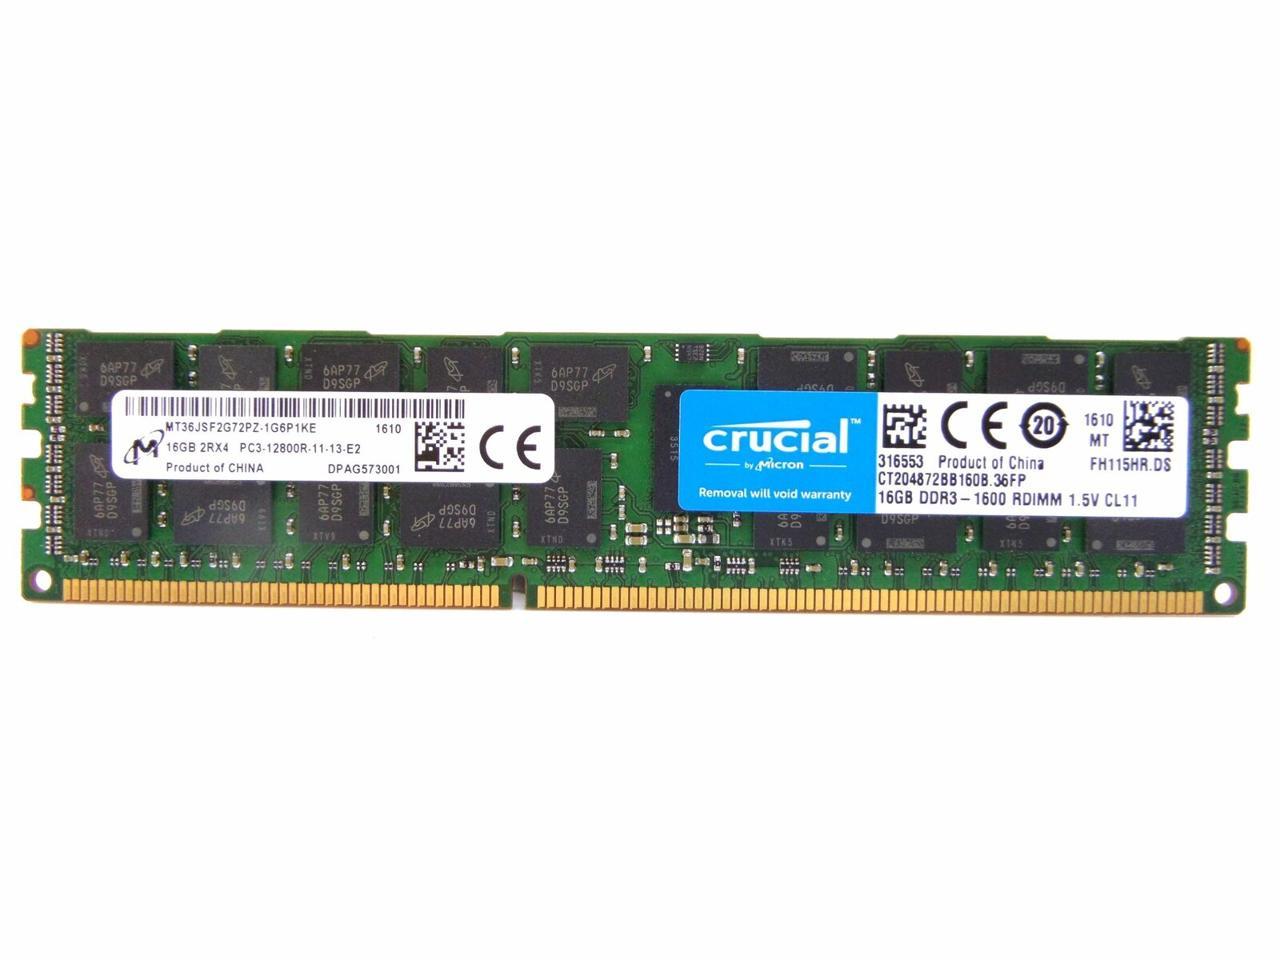 1x16GB MemoryMasters Supermicro MEM-DR316L-SL01-ER16 16GB DDR3 1600 ECC Registered RDIMM Memory RAM PC3 12800 